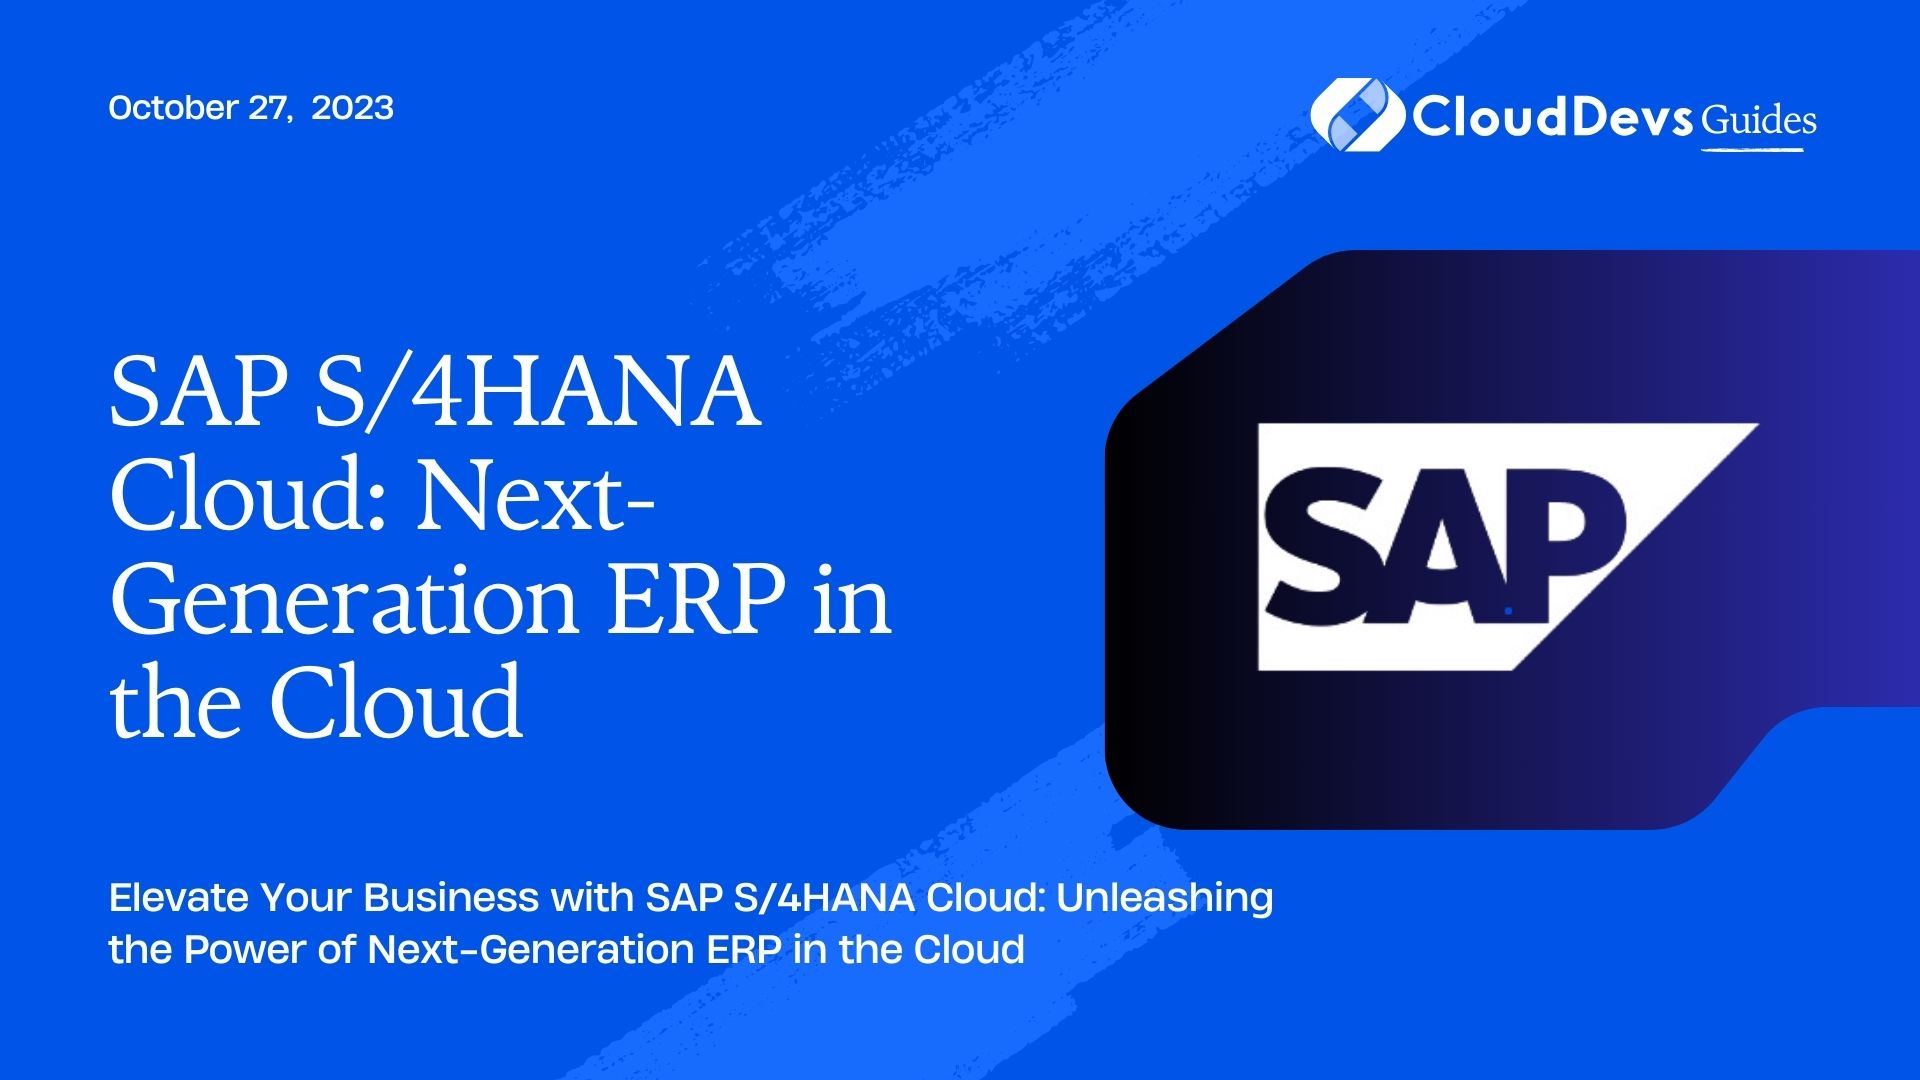 SAP S/4HANA Cloud: Next-Generation ERP in the Cloud